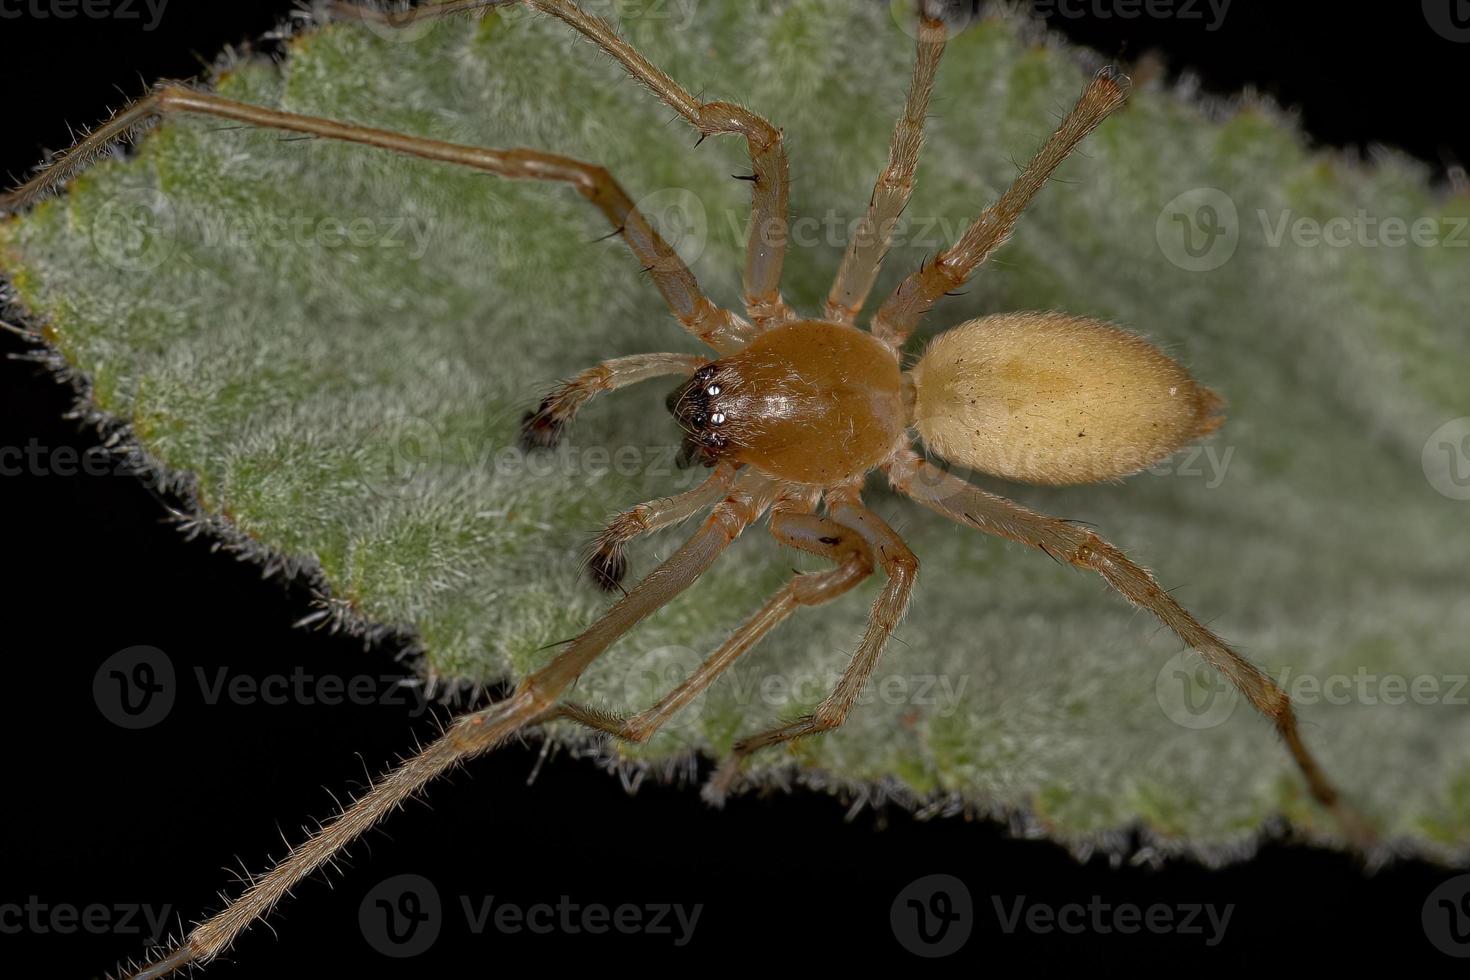 Adult Male Longlegged Sac Spider photo